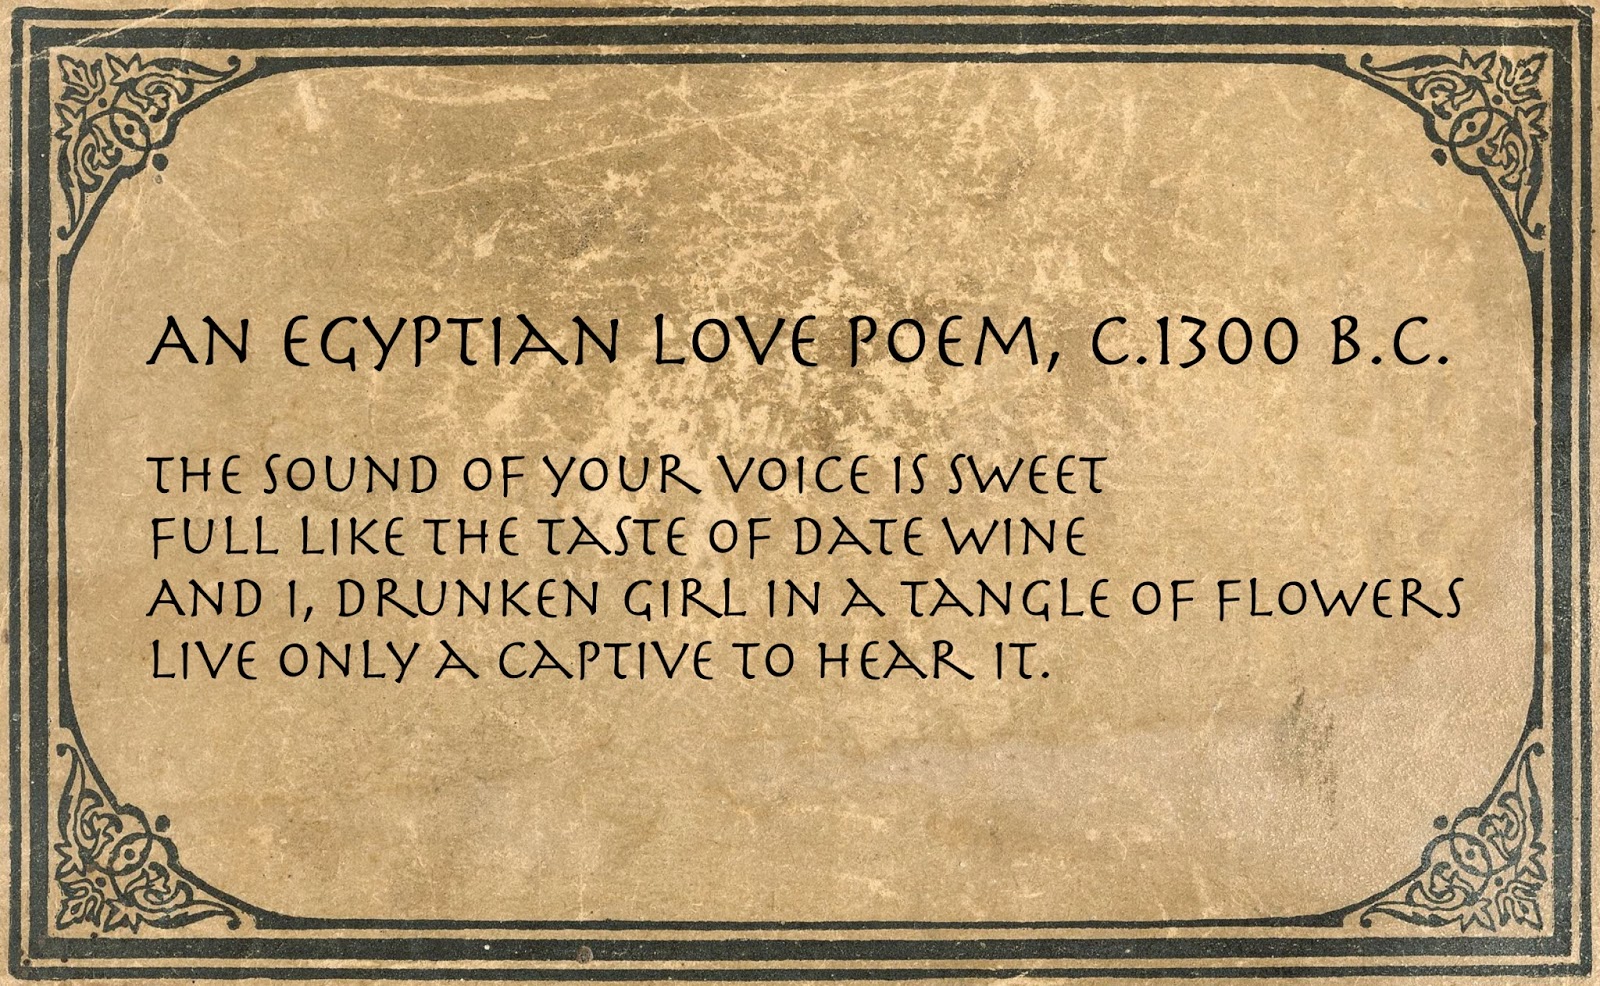 An Egyptian Love Poem, c.1300 B.C.